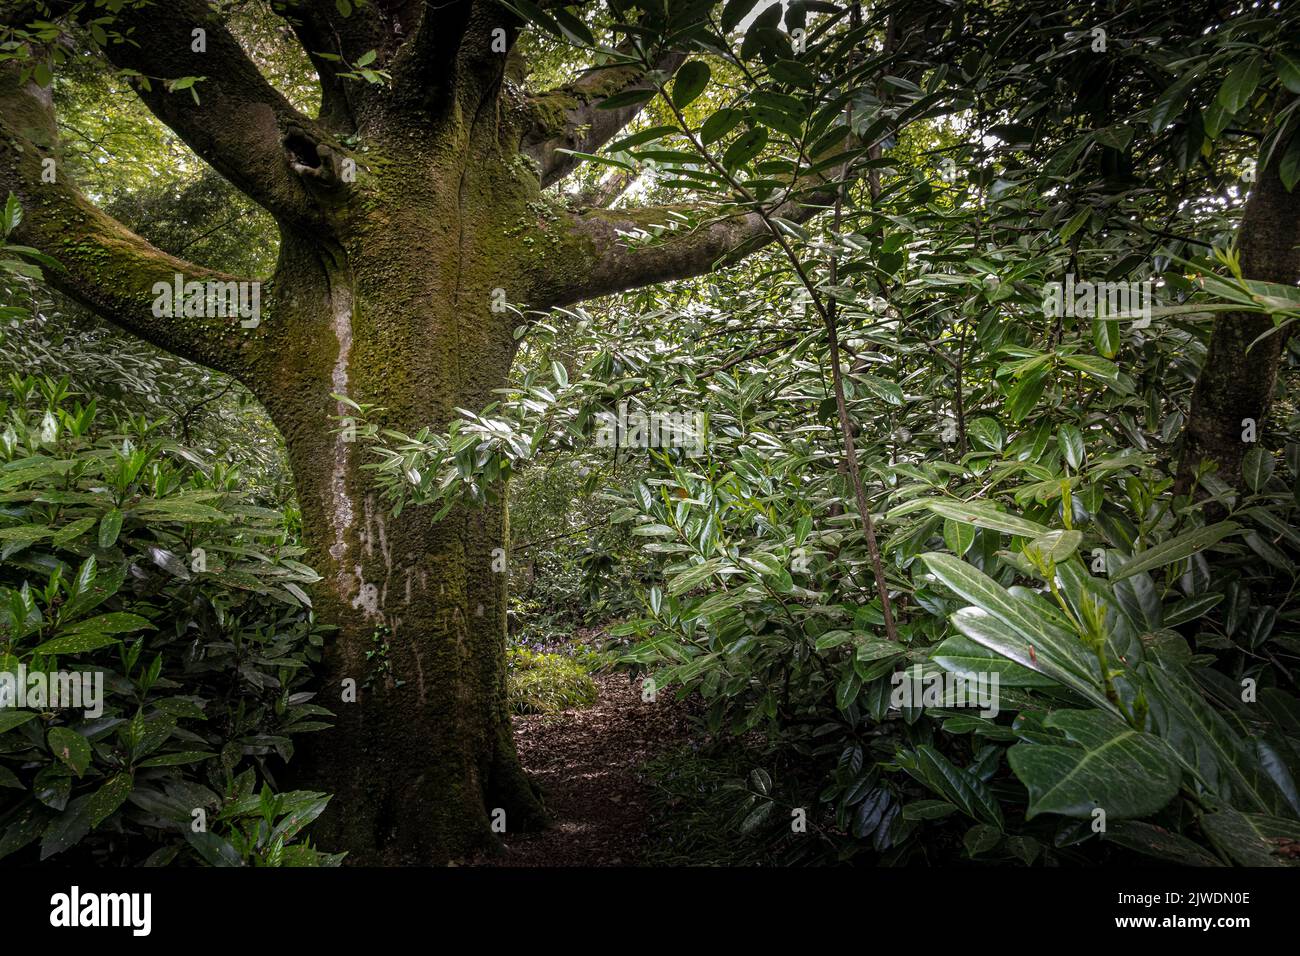 Ein moosbedeckter Baum im wilden subtropischen Penjjick Garden in Cornwall. Penjerrick Garden gilt in England als echter Dschungelgarten in Cornwalls Stockfoto